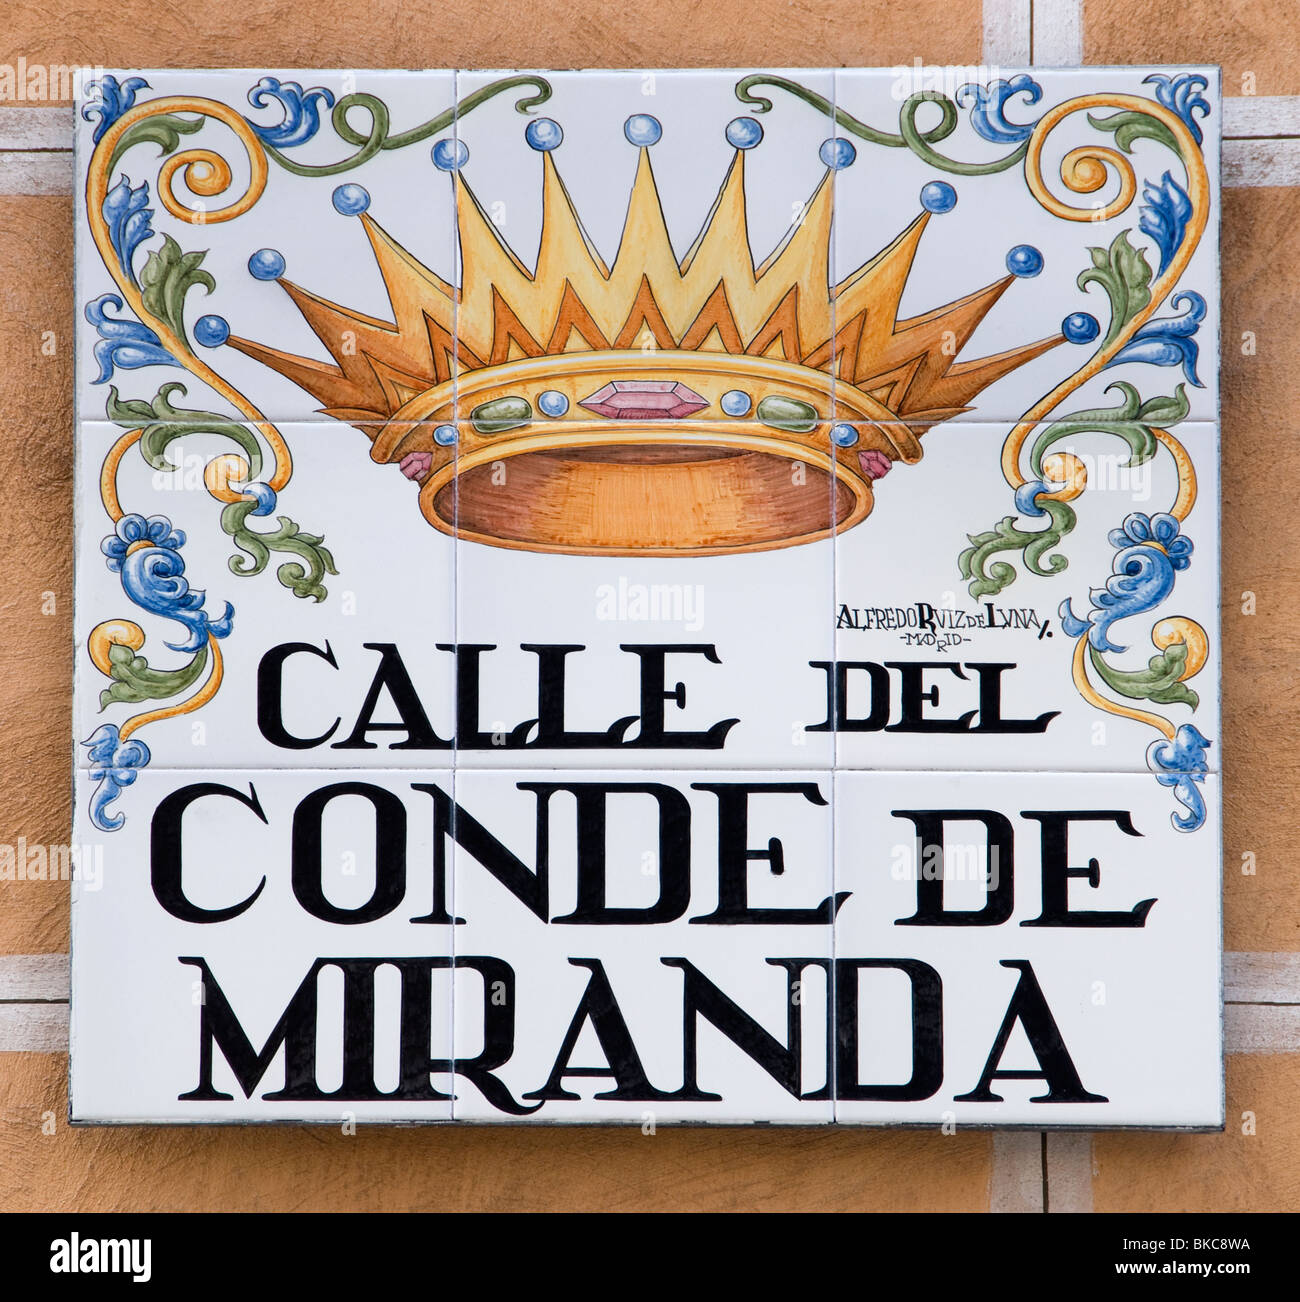 Calle del Conde de Miranda Madrid Spain street sign Name Stock Photo